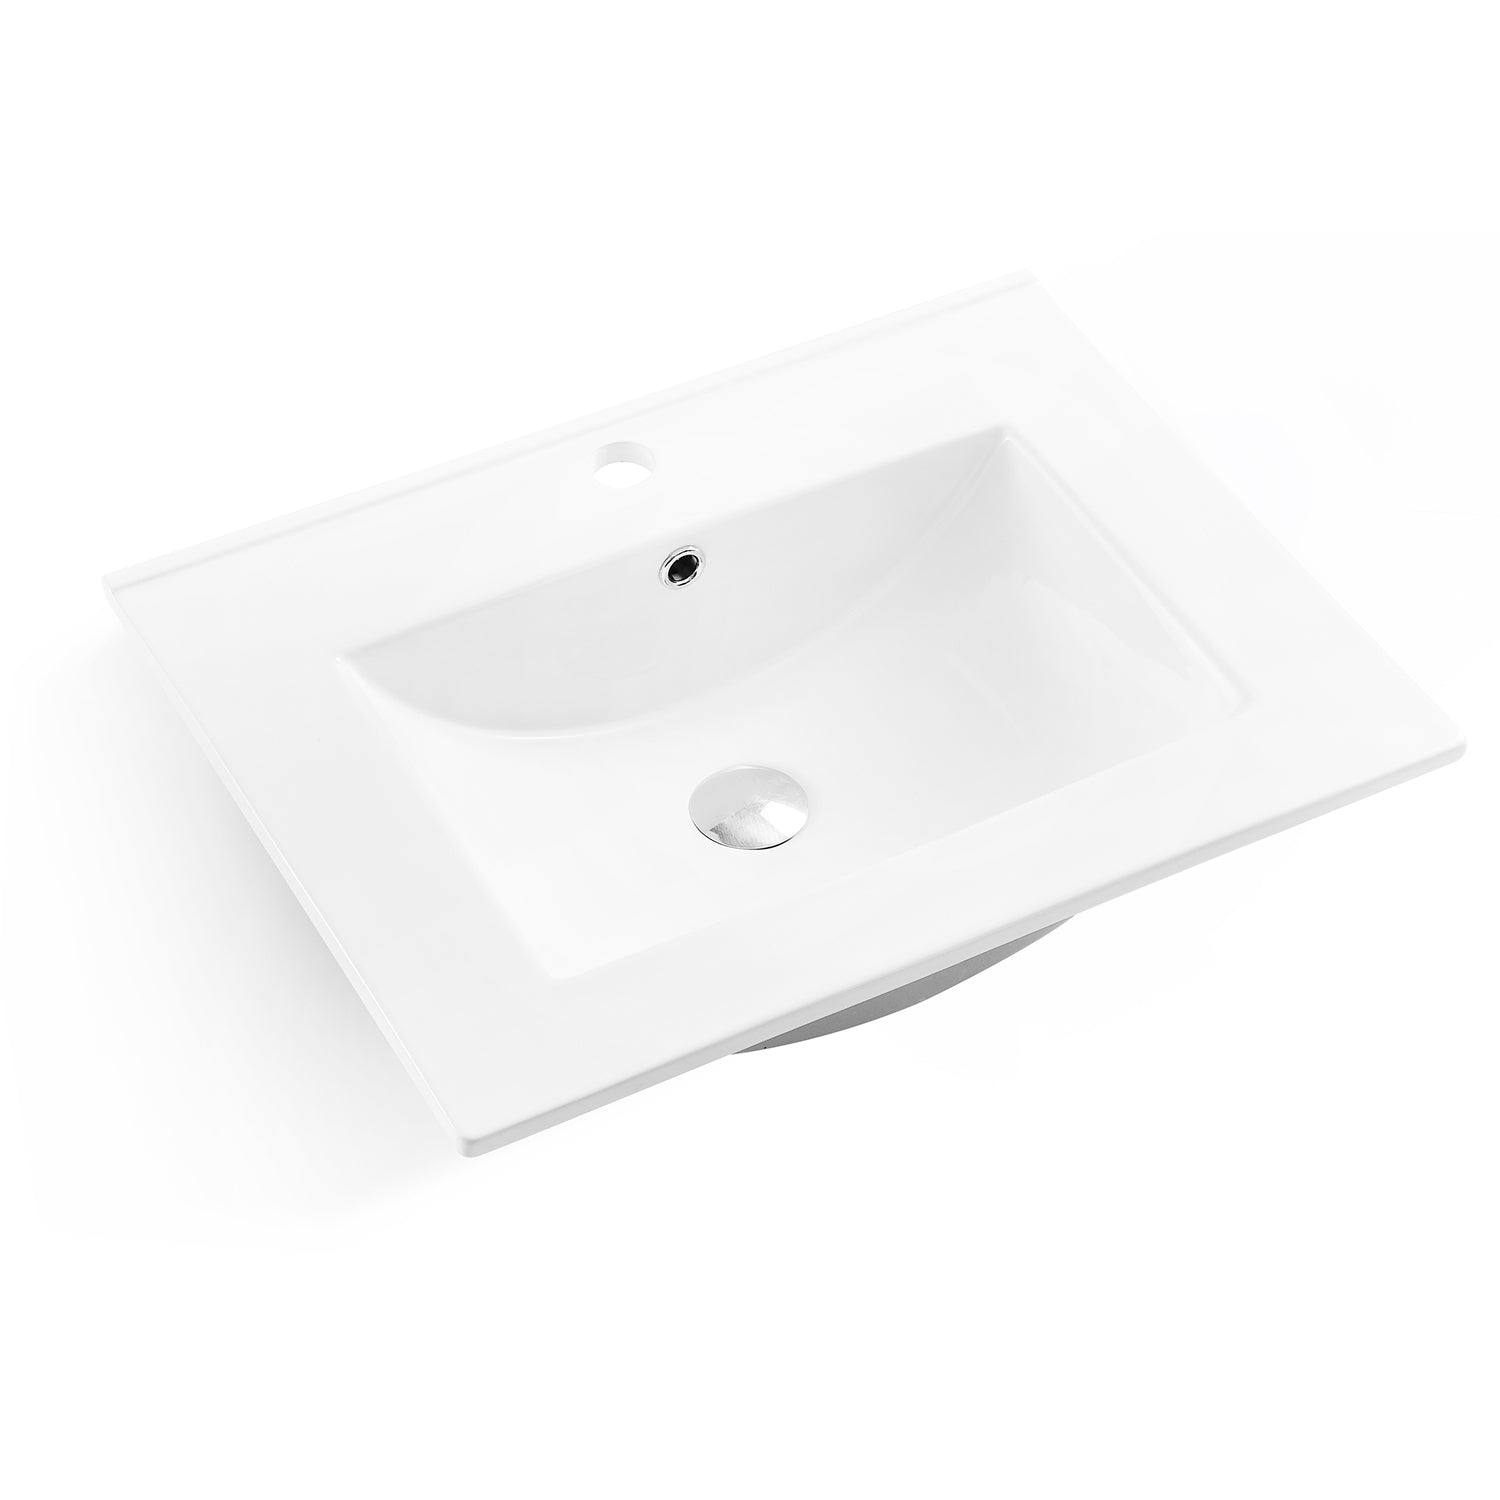 DAX Square Ceramic Single Bowl Top Mount Bathroom Sink, 24-3/8 x 18-9/16 x 6-3/8 Inches (BSN-660-E)